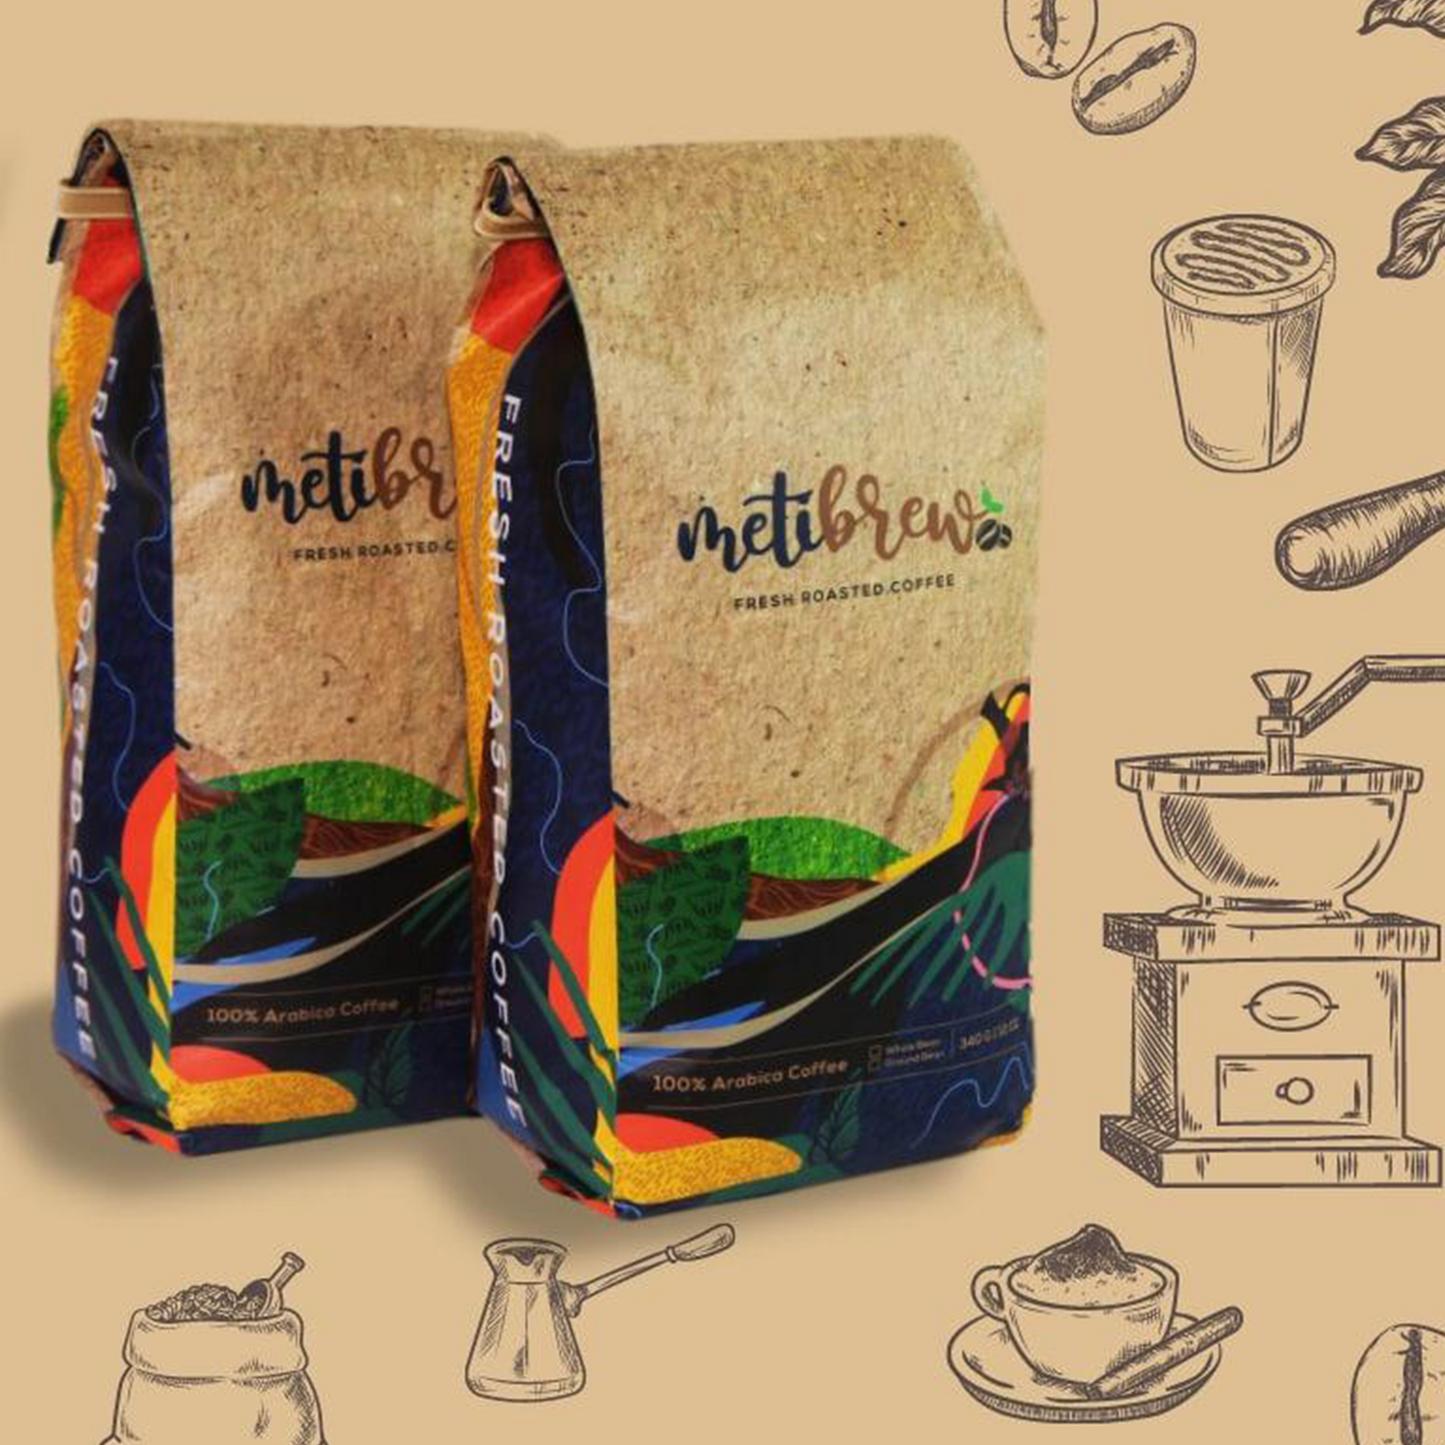 Yirgacheffe 2 bags Coffee - Subscribe